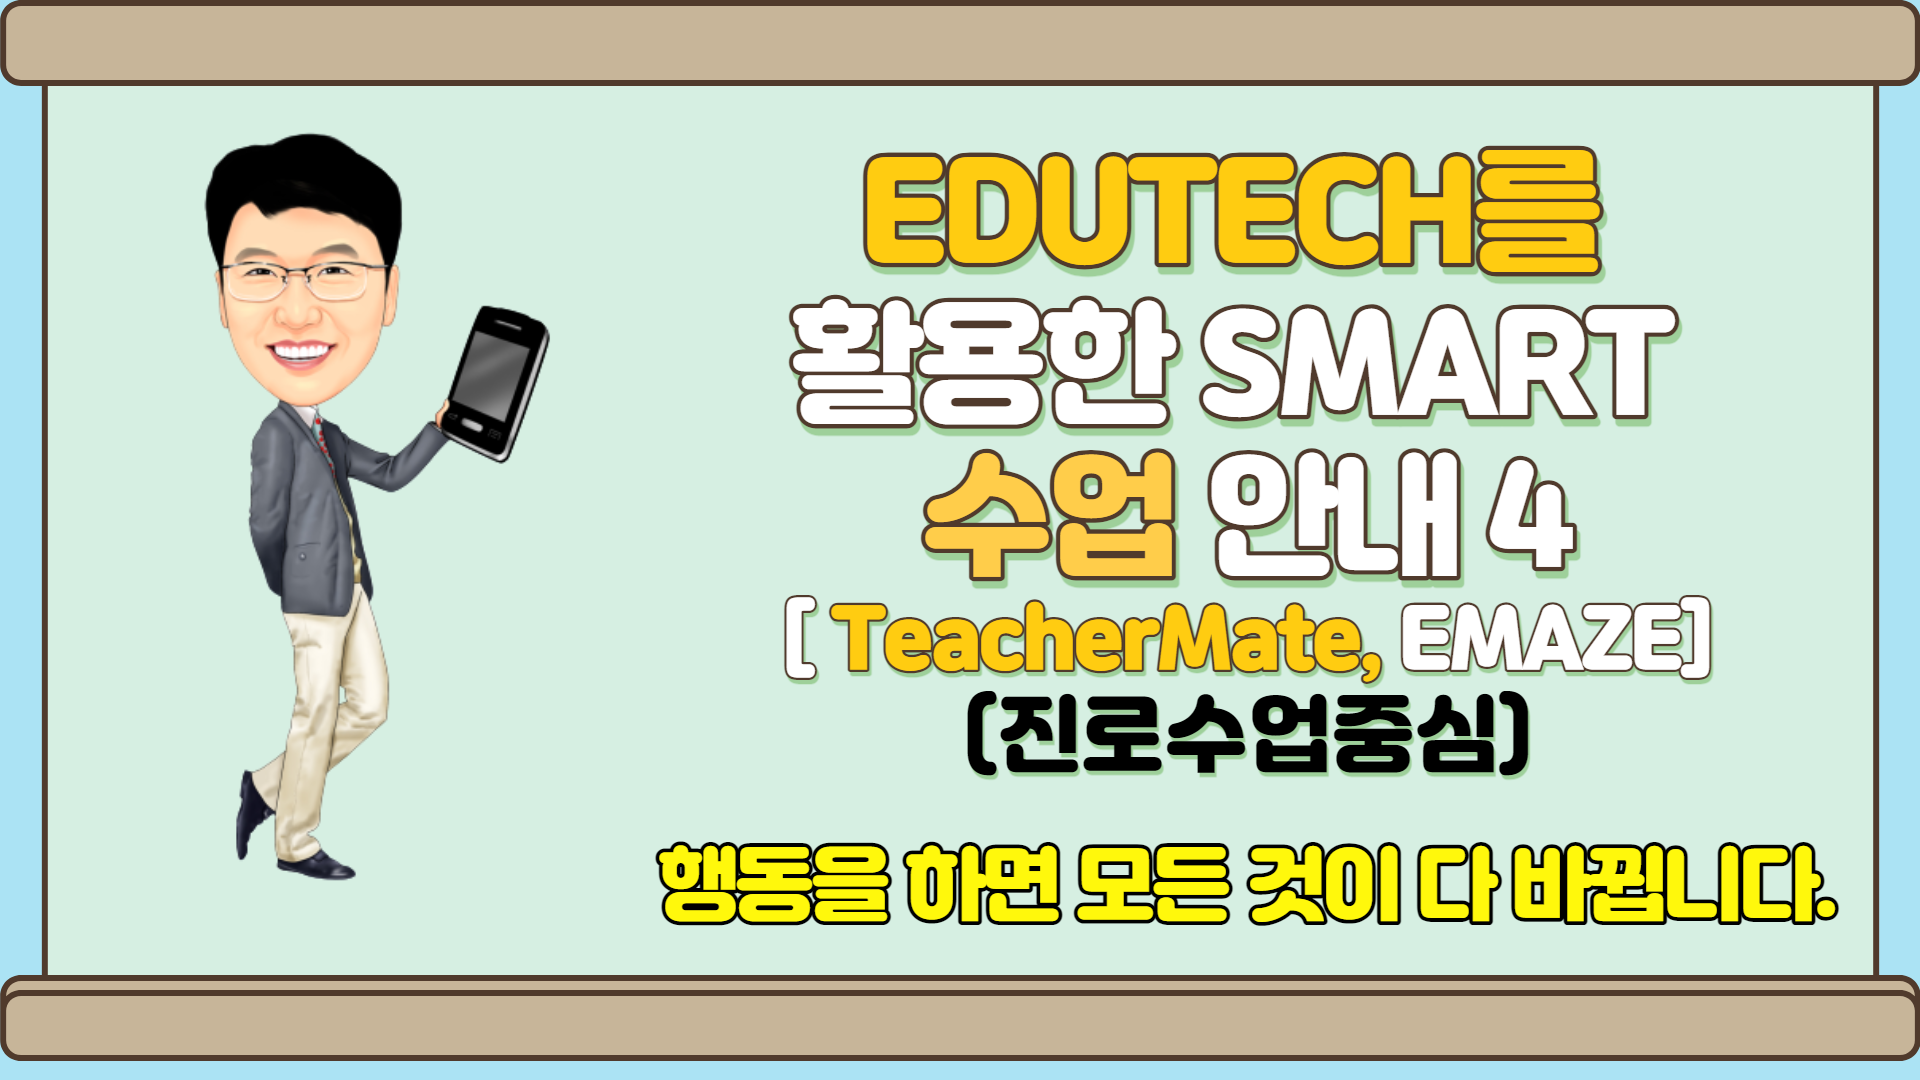 EDUTECH를 활용한 smart 수업 방법 안내 4(진로수업을 중심으로)(Teachermade,Emaze)